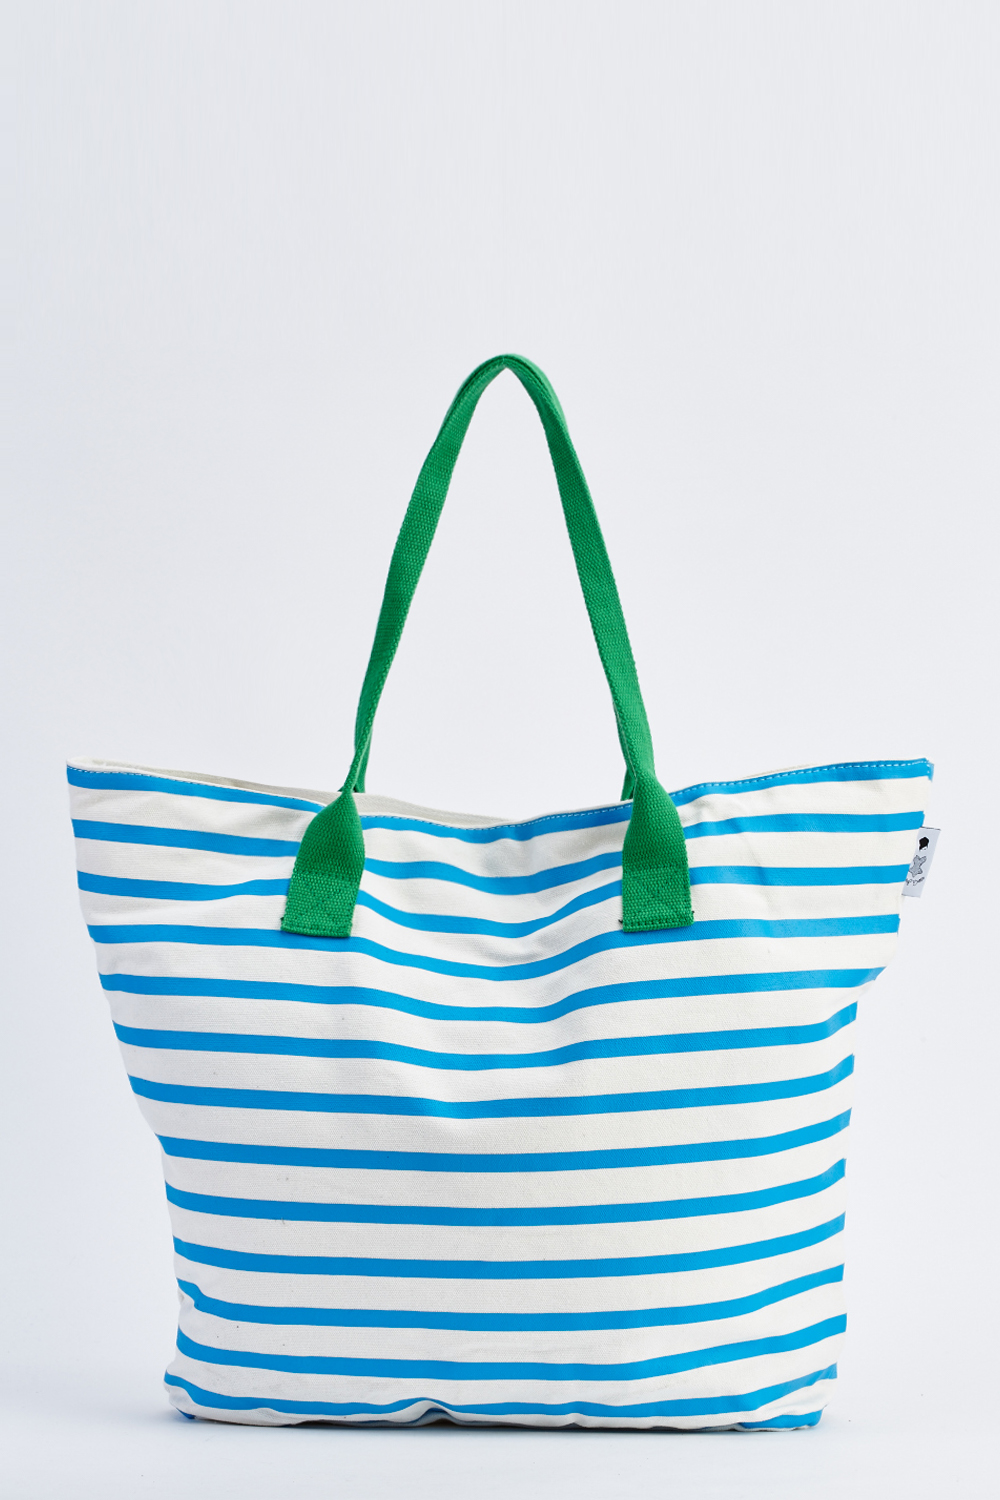 Striped Beach Bag Set - Just $7